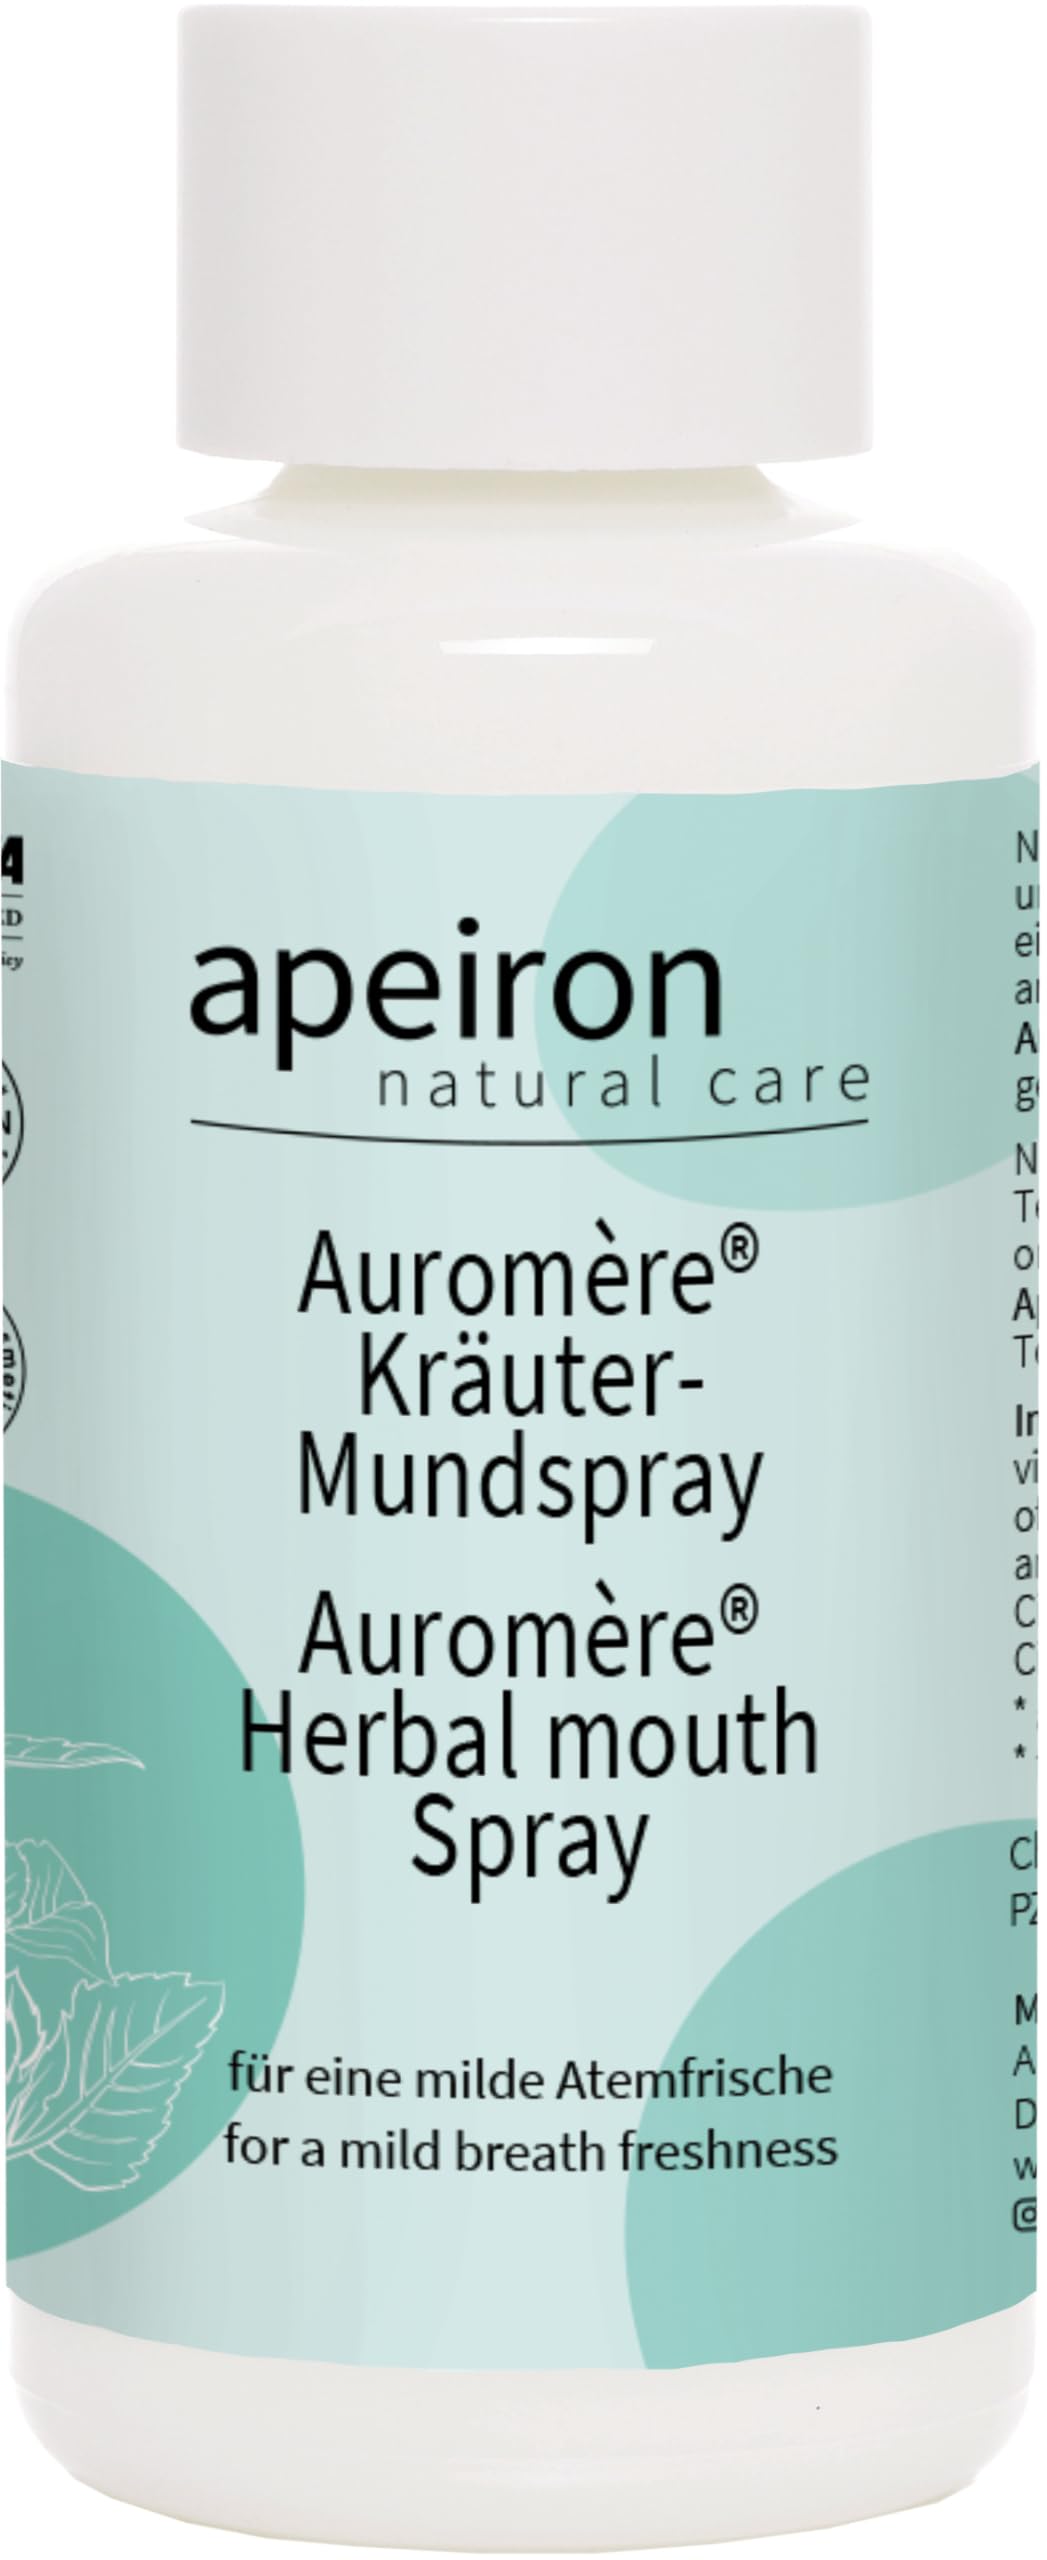 Apeiron Auromère Kräuter-Mundwasser Konzentrat (1 x 100 ml)